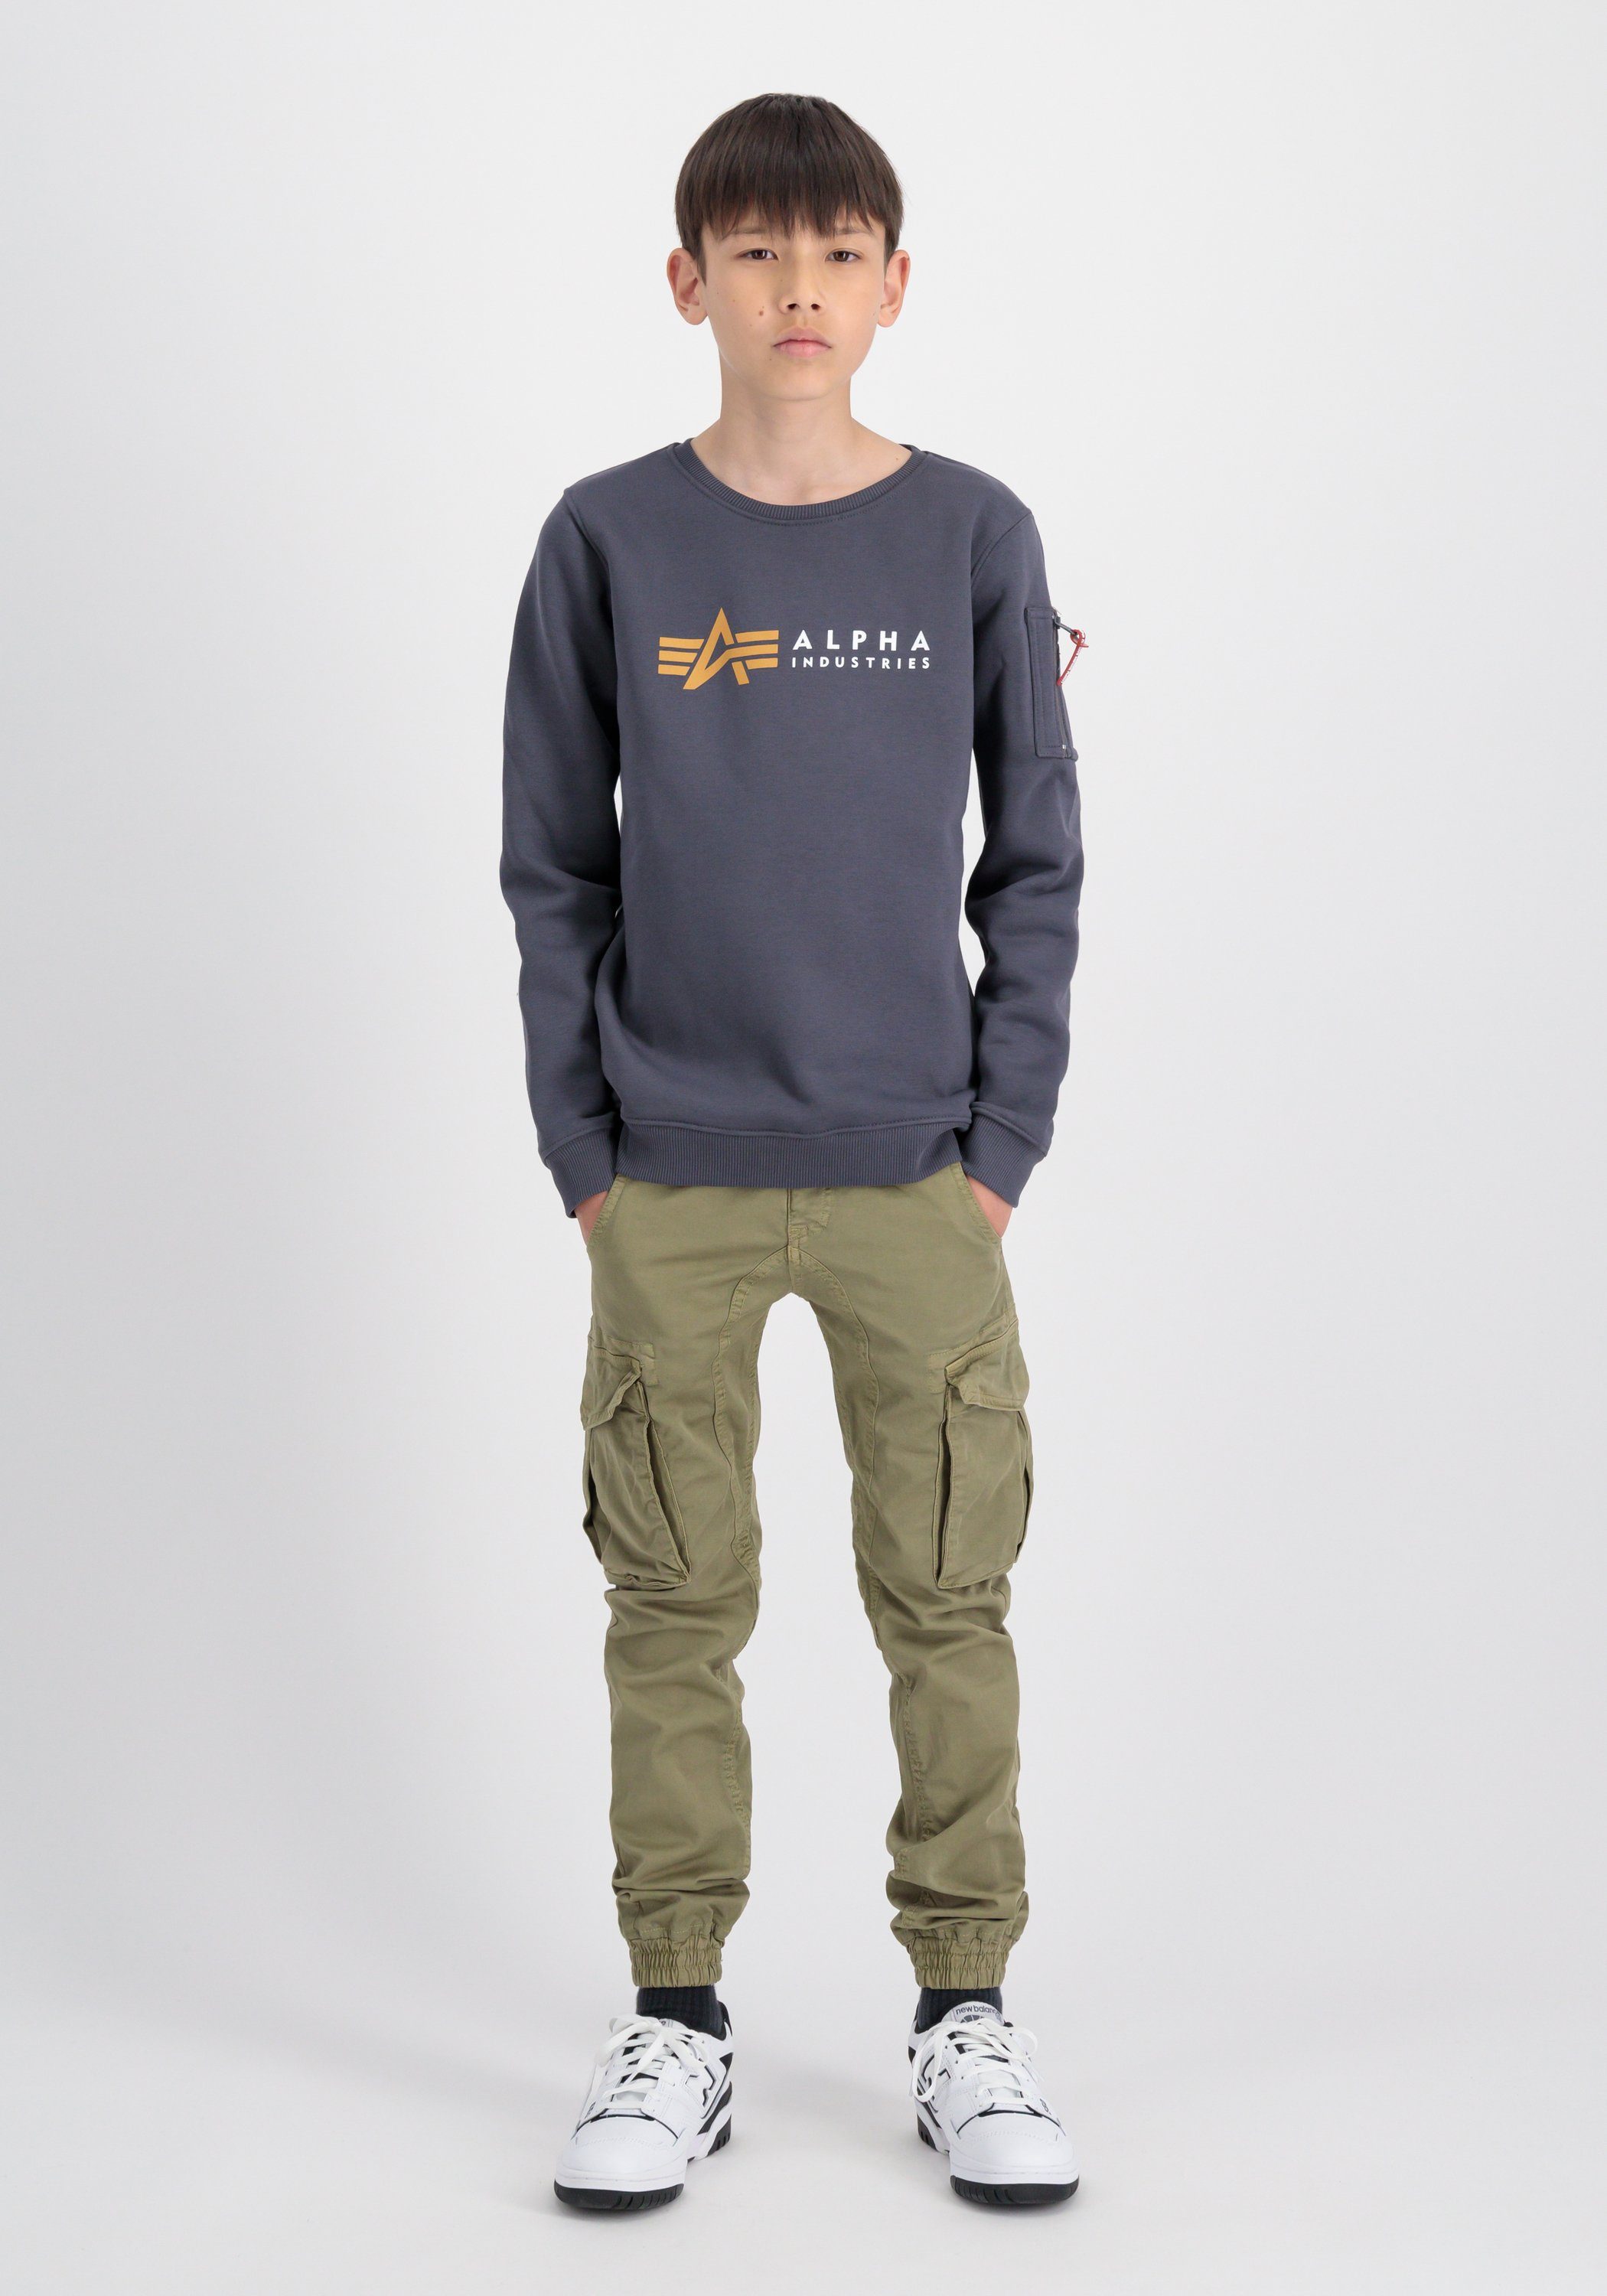 Alpha Kids Industries Industries Sweatshirts Sweater - Alpha